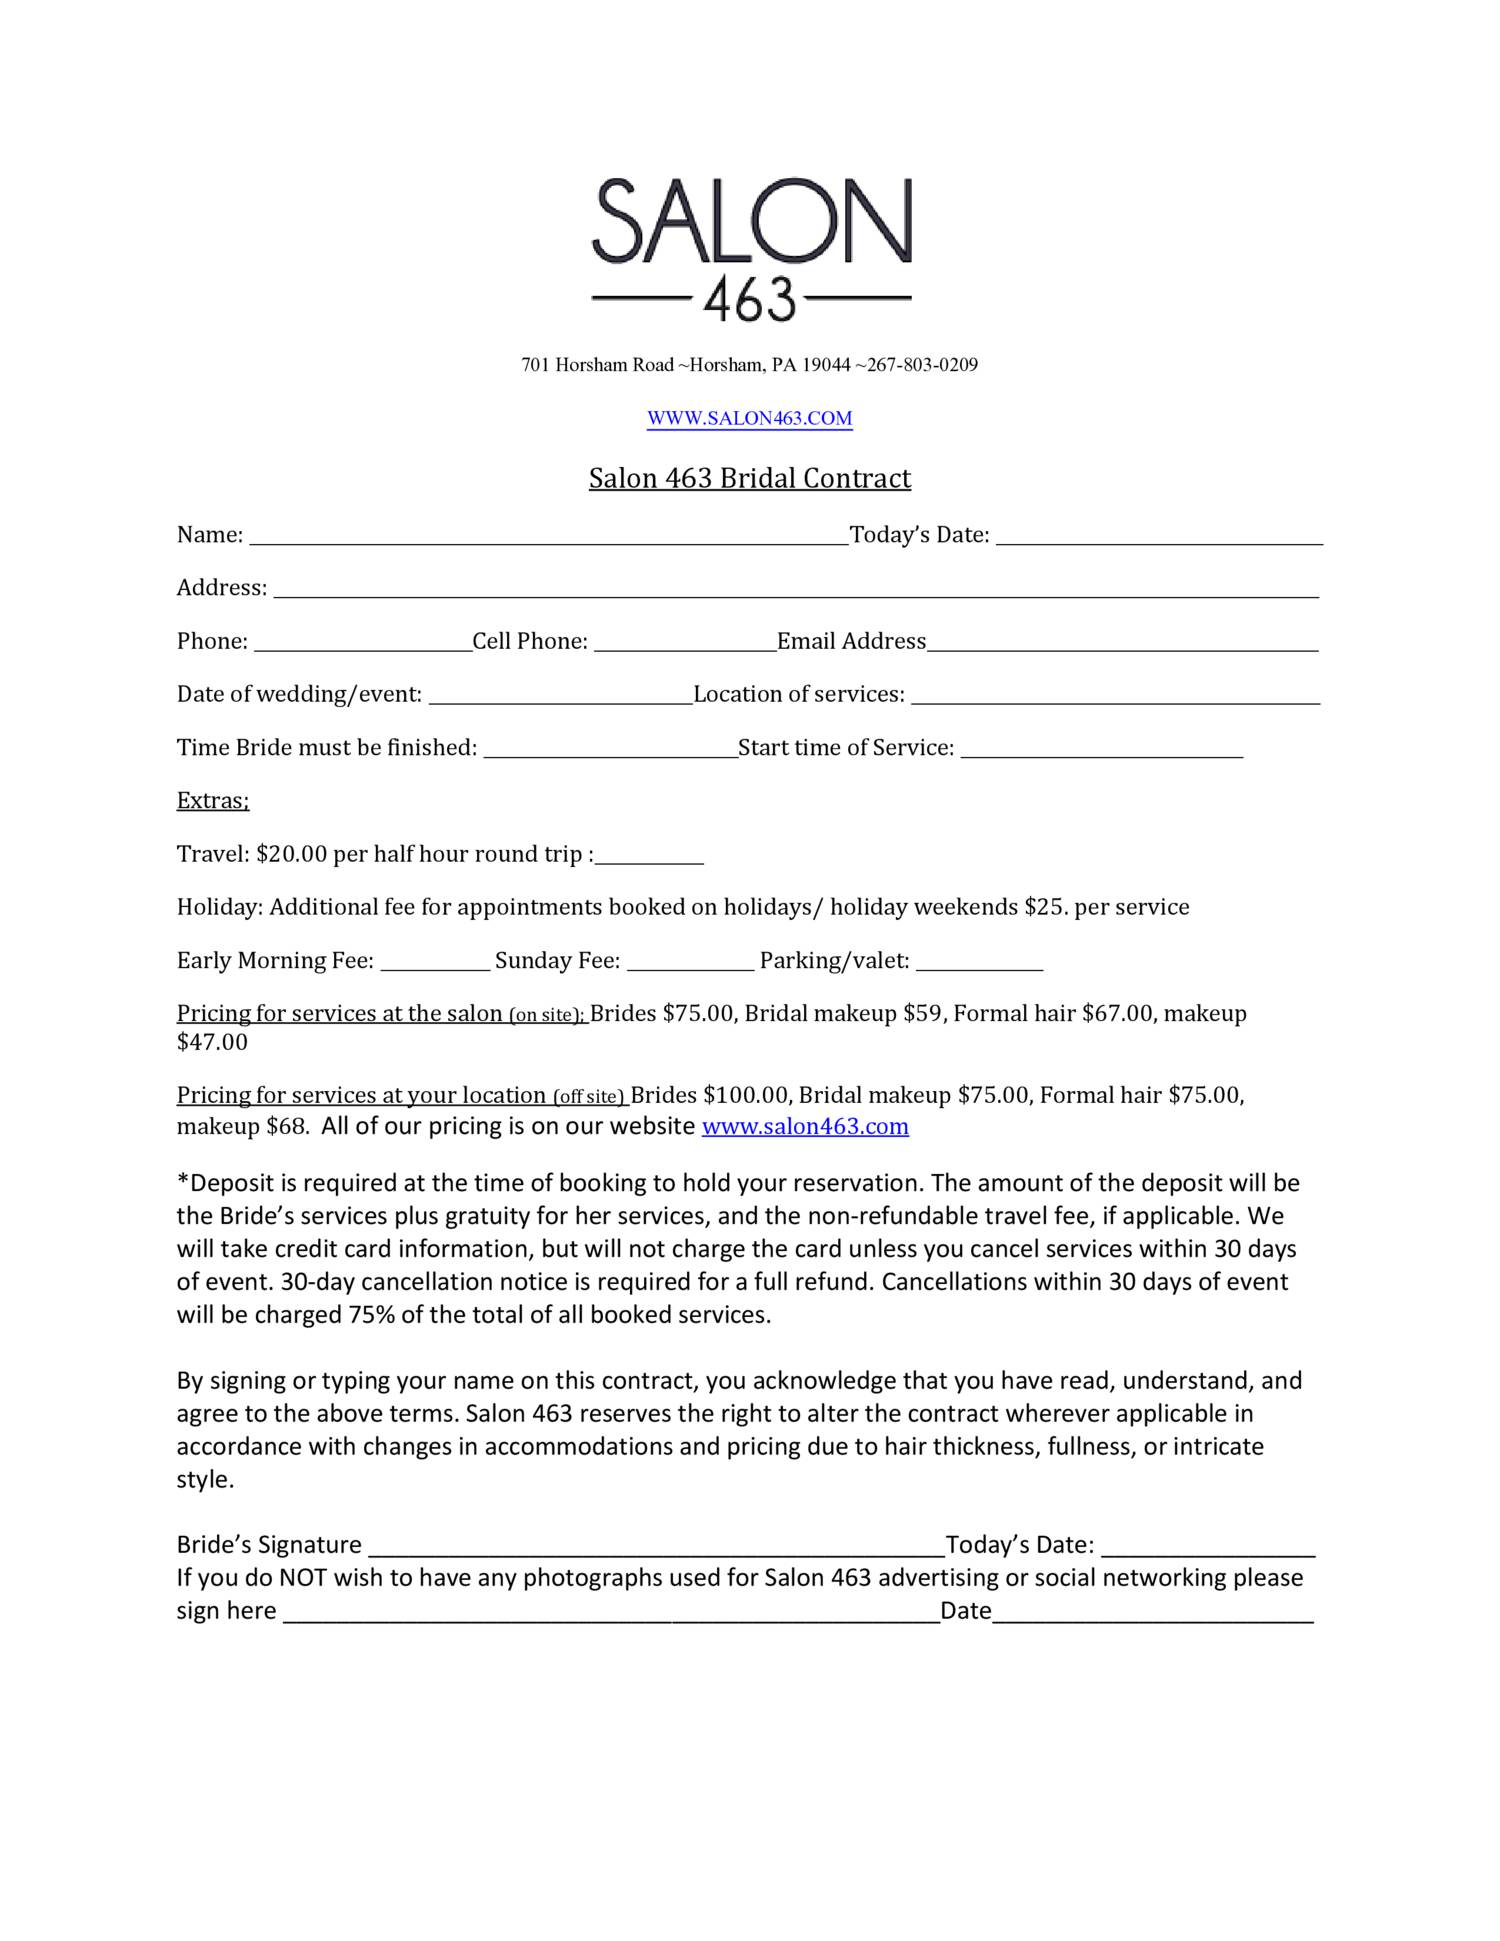 Salon463 Bridal Contract.docx DocDroid